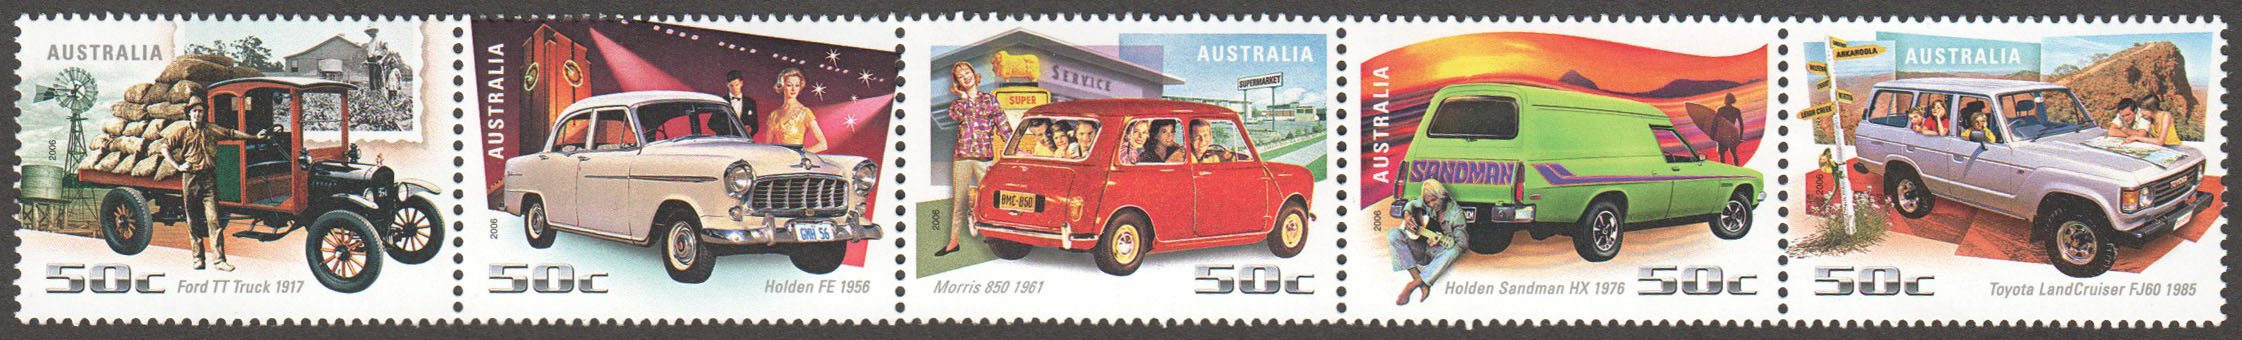 Australia Scott 2552b MNH (A2-16)